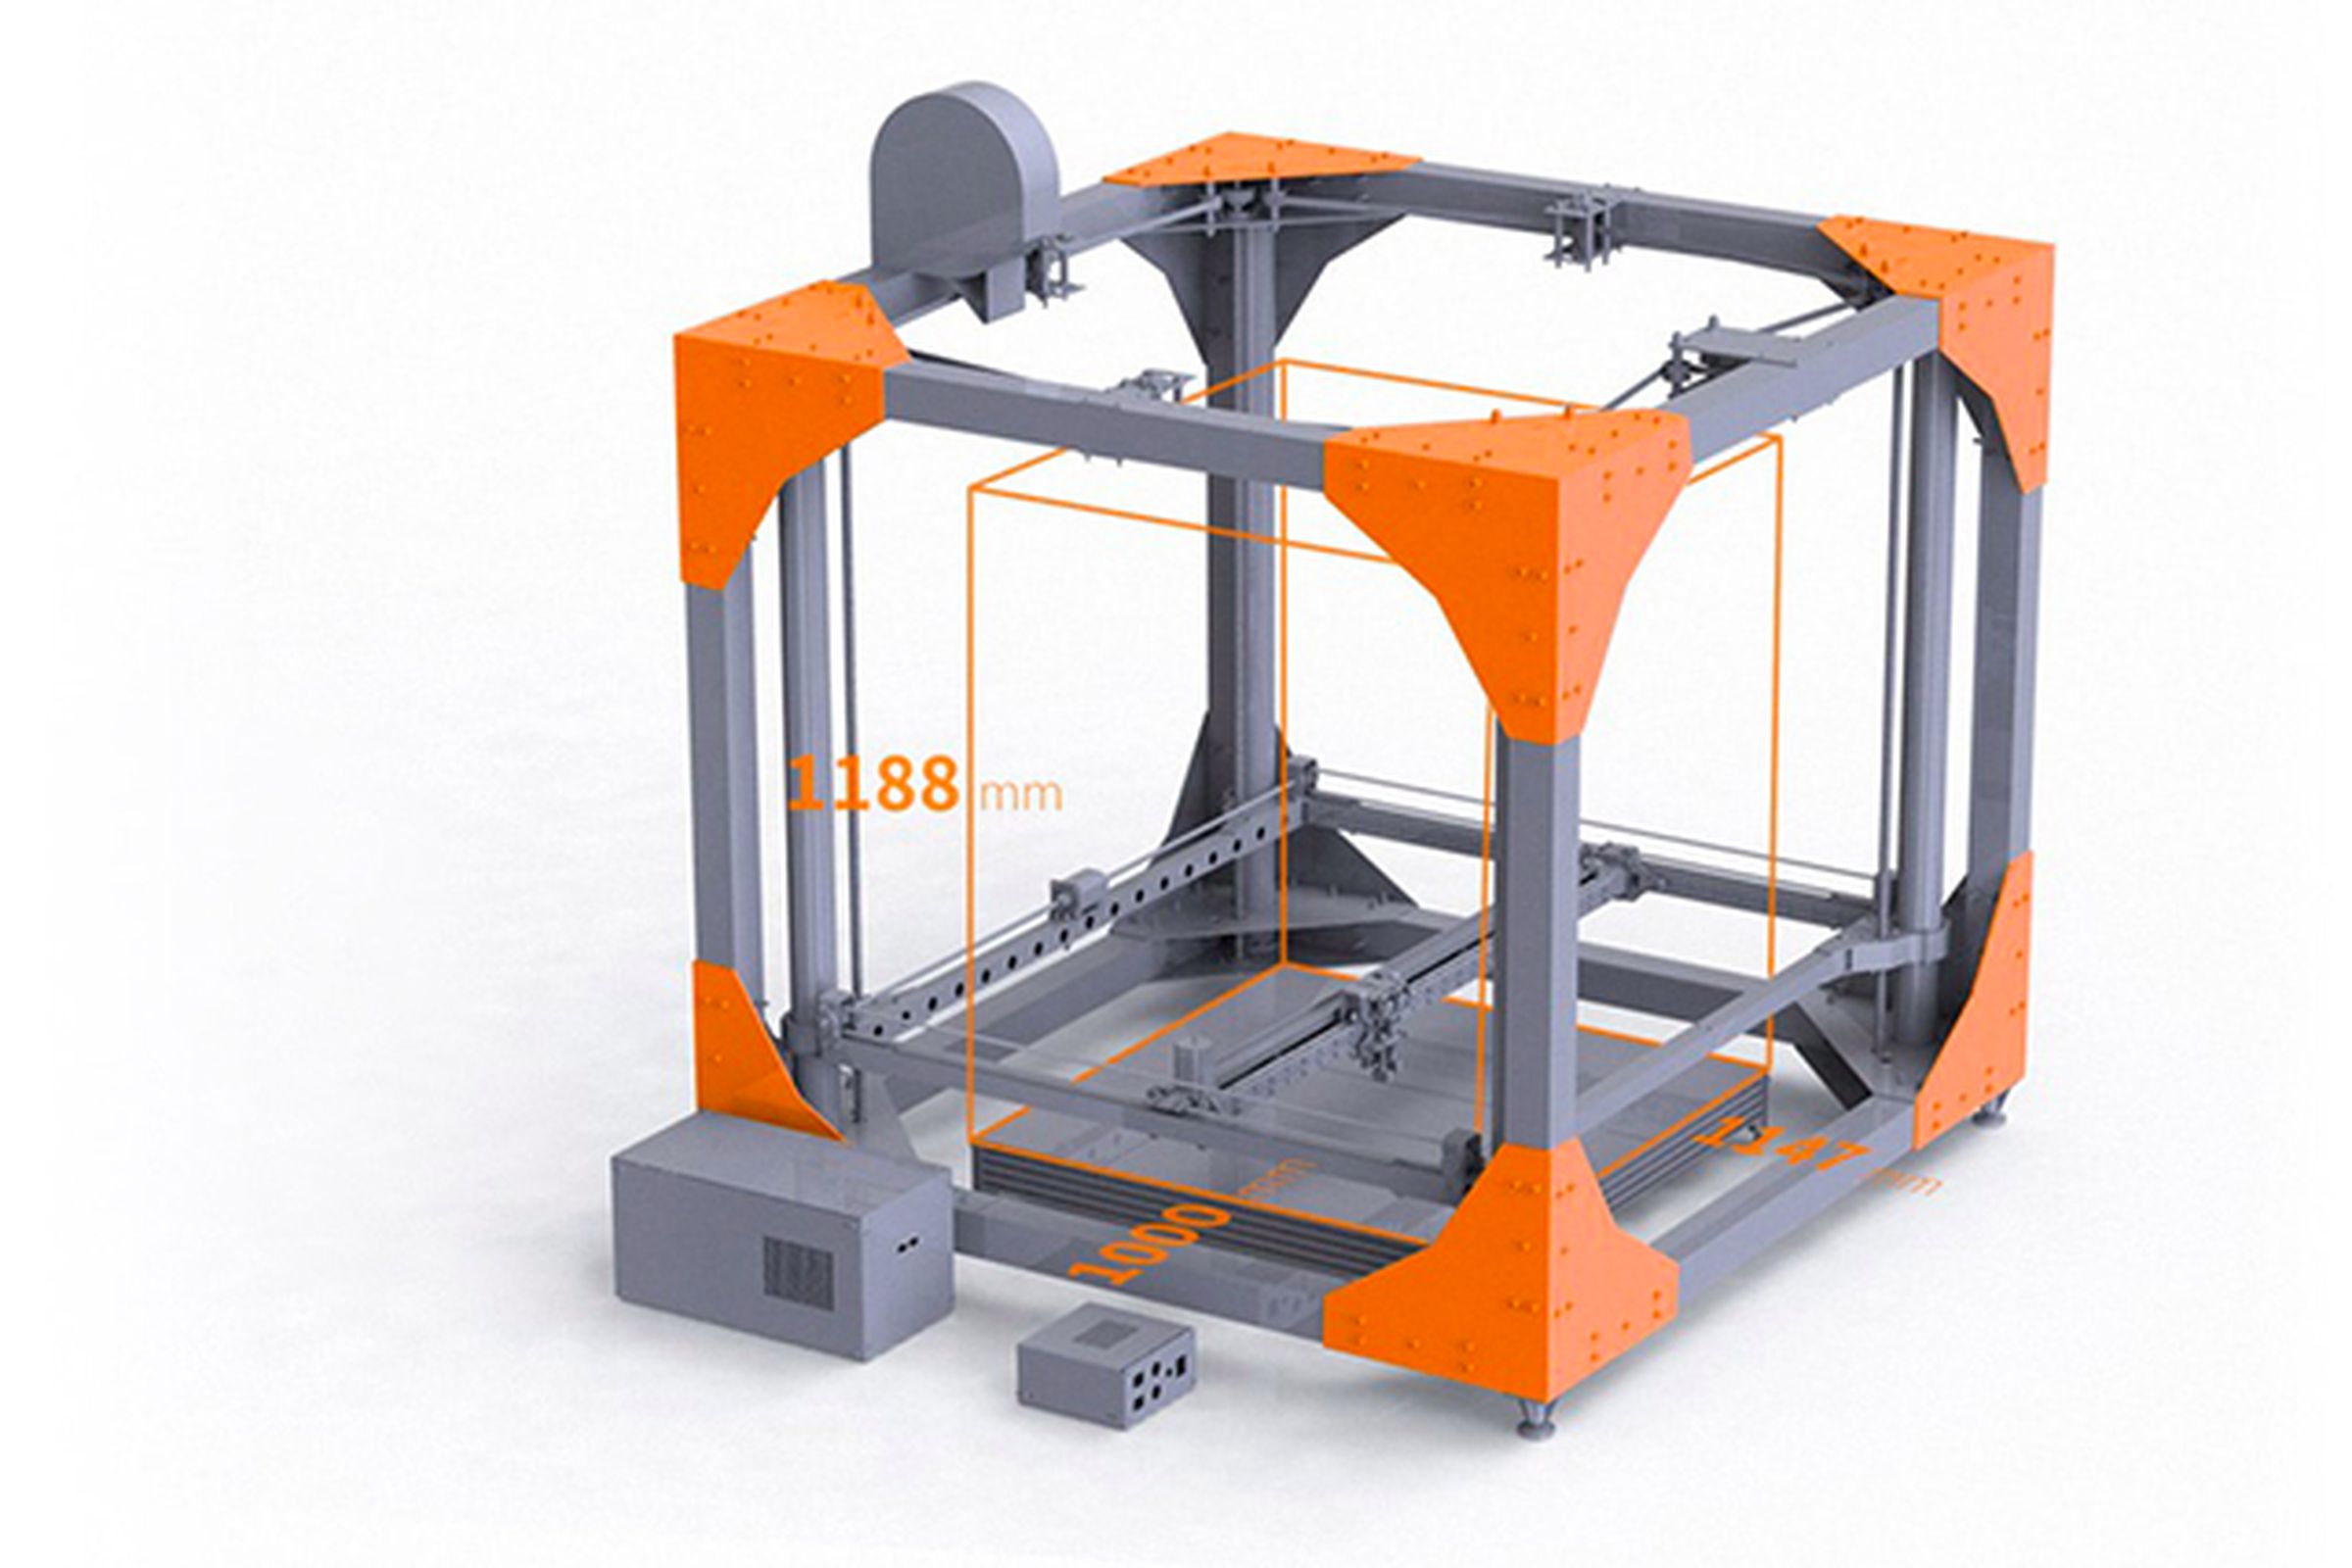 BigRep One 3D printer